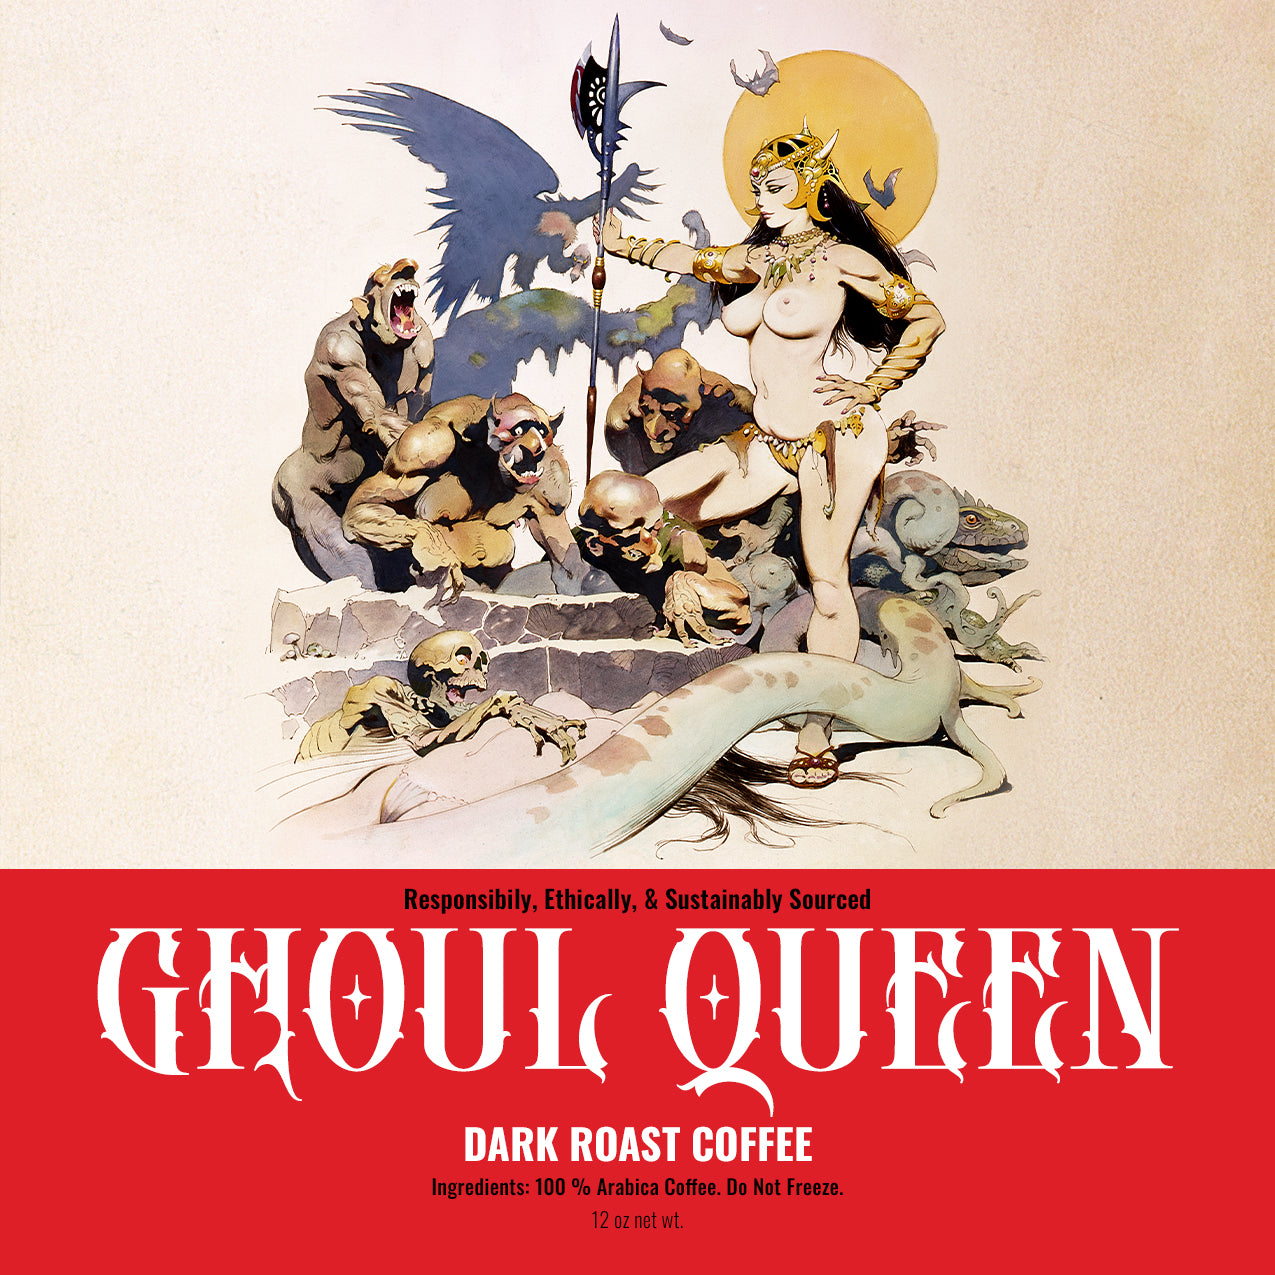 Ghoul Queen: Dark Roast Coffee